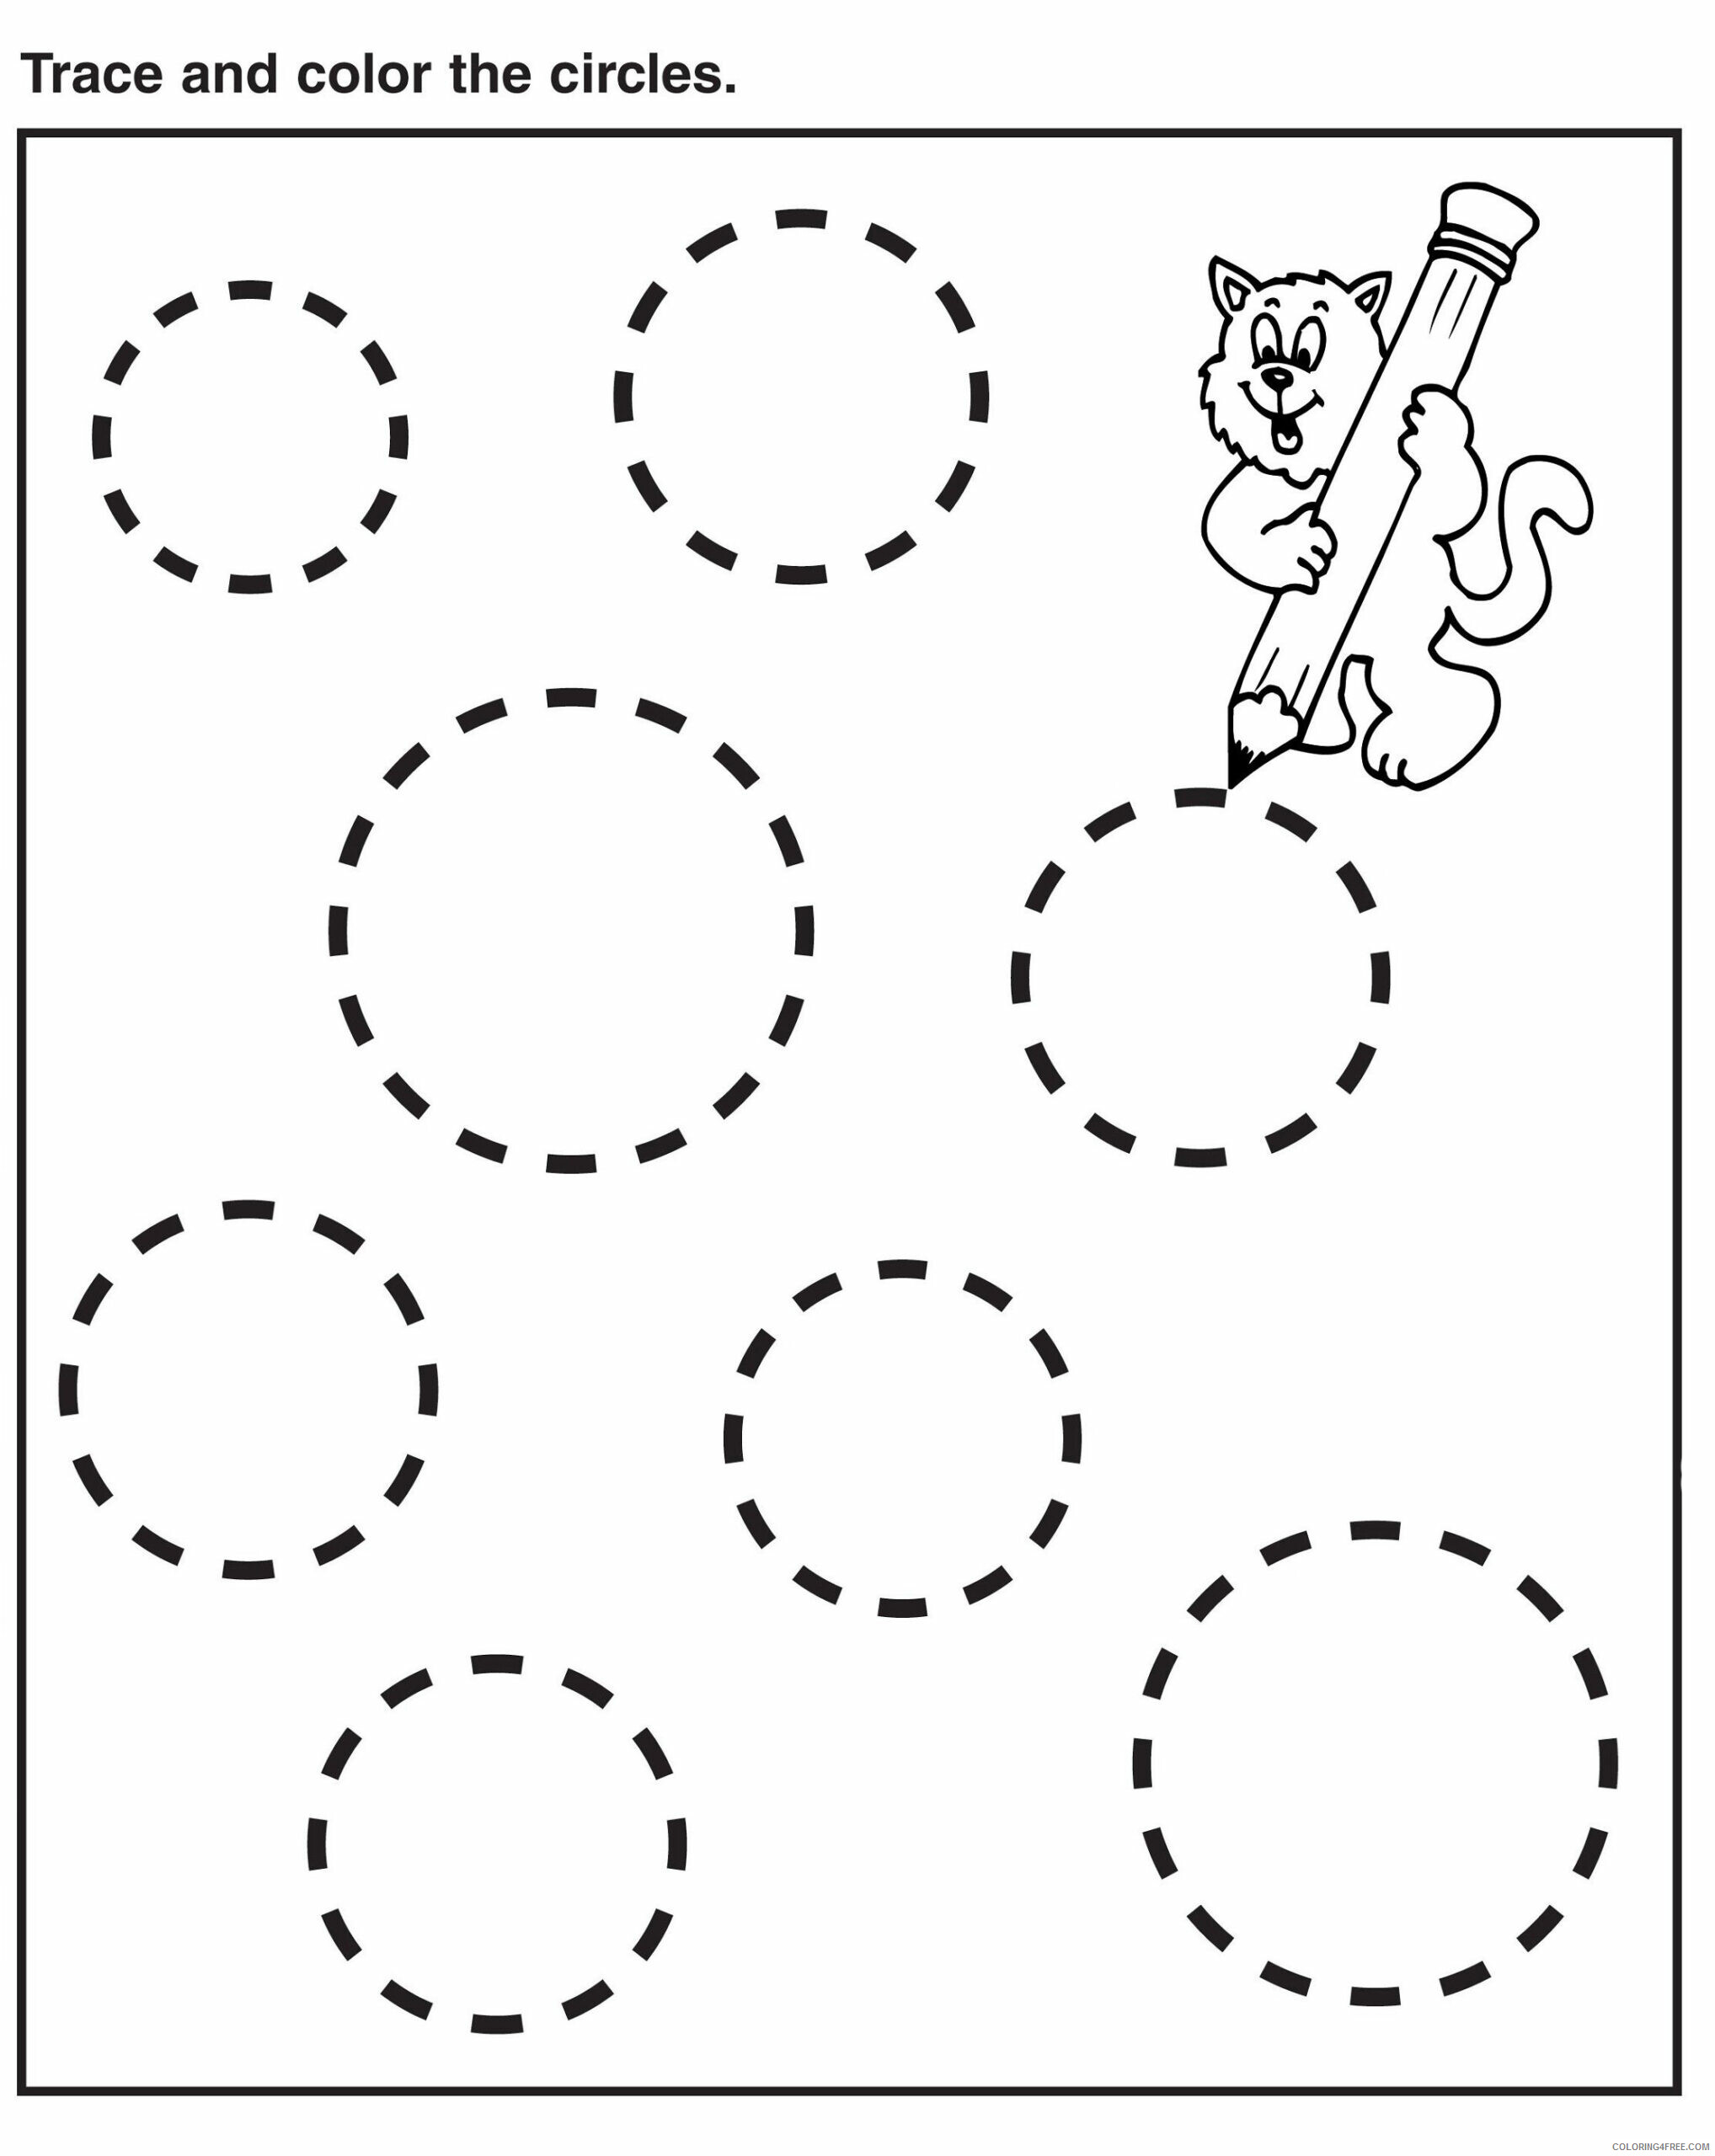 Preschool Worksheets Coloring Pages Preschool Tracing Circles Printable 2021 Coloring4free